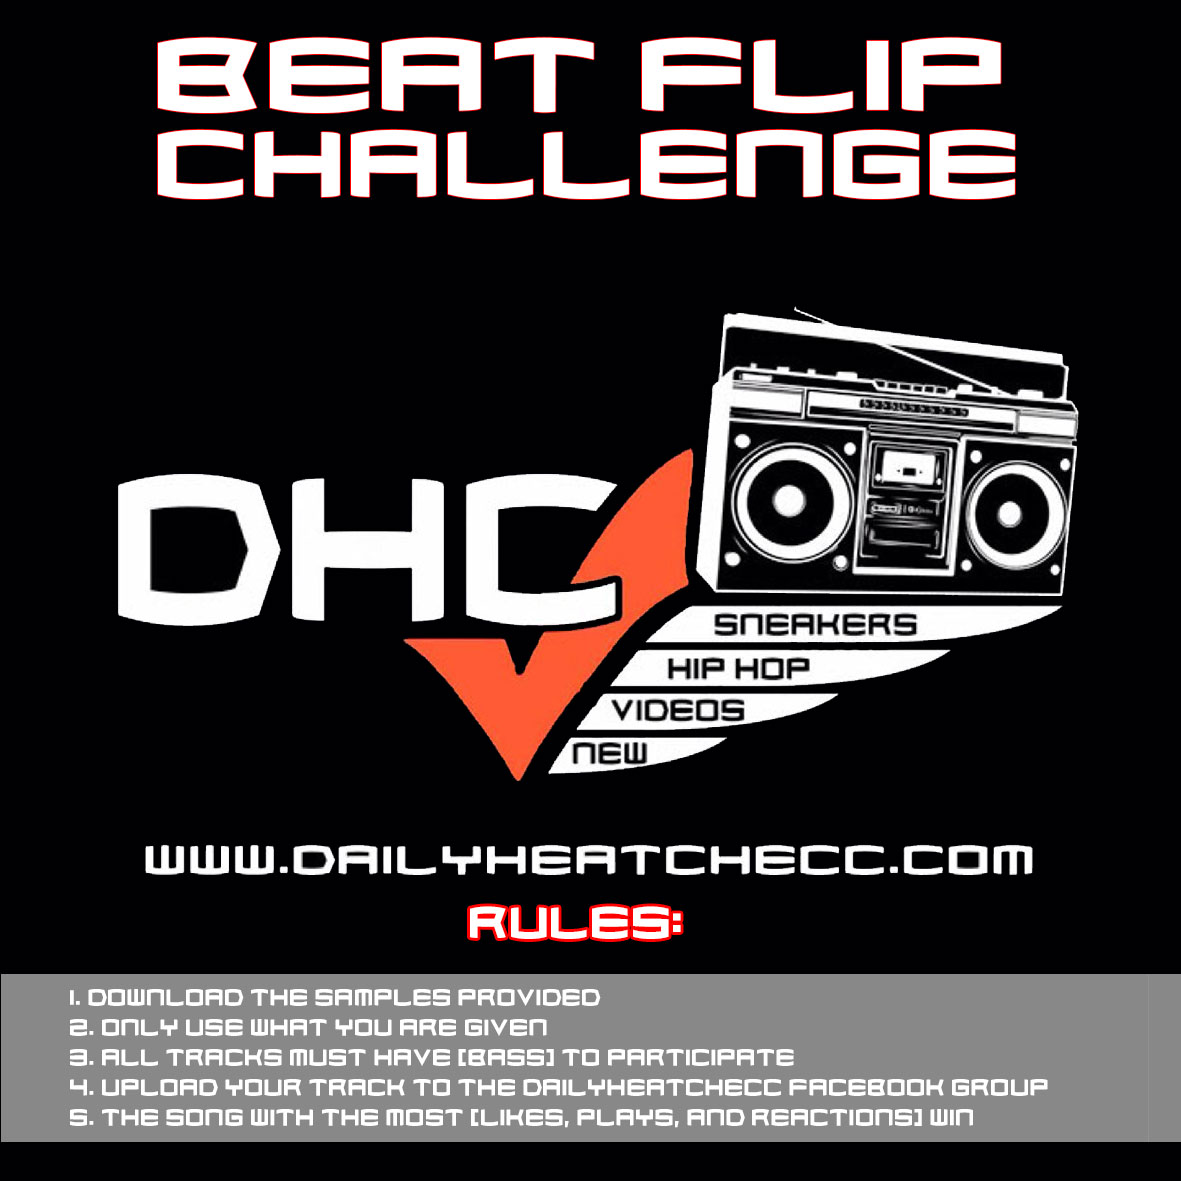 Dailyheatchecc Buy Beats Buy Instrumentals Free Drum Kits Free Type Beats Beats For Sale Free Download J Dilla Type Beat Beat Flip Challenge 17 Instrumental Dailyheatchecc